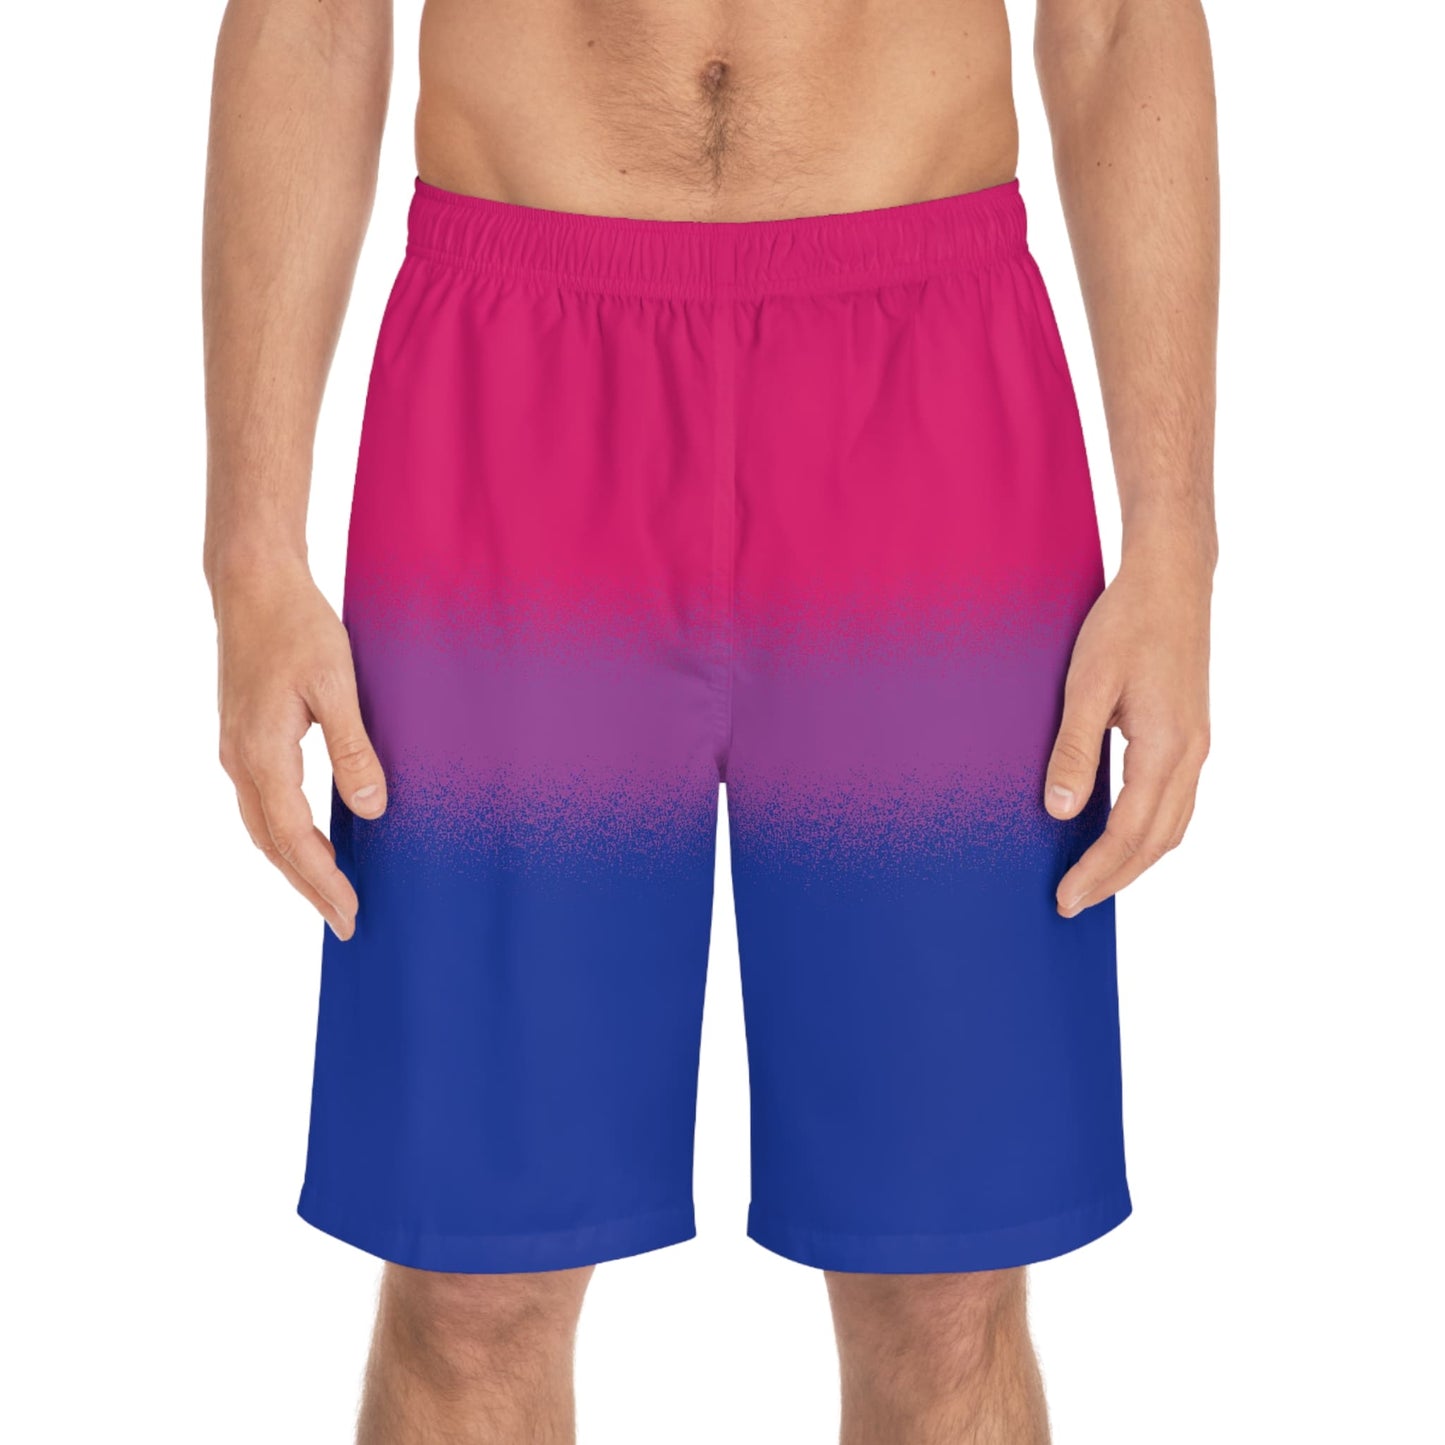 bisexual swim shorts, front